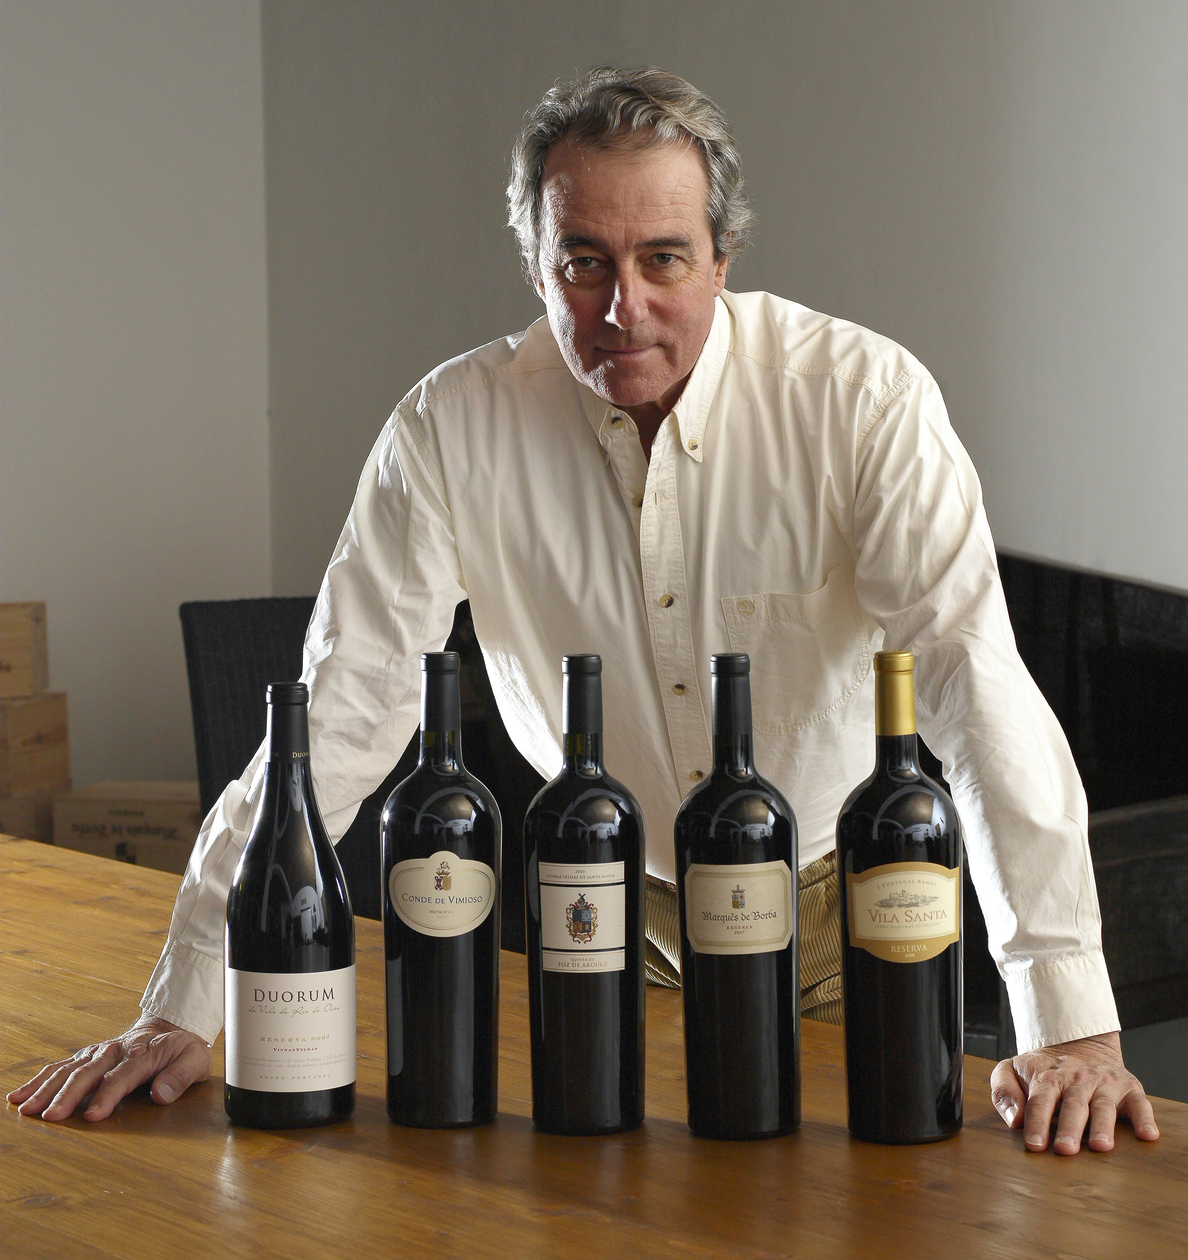 João Portugal Ramos, el hombre que situó al vino portugués en el mapa mundial